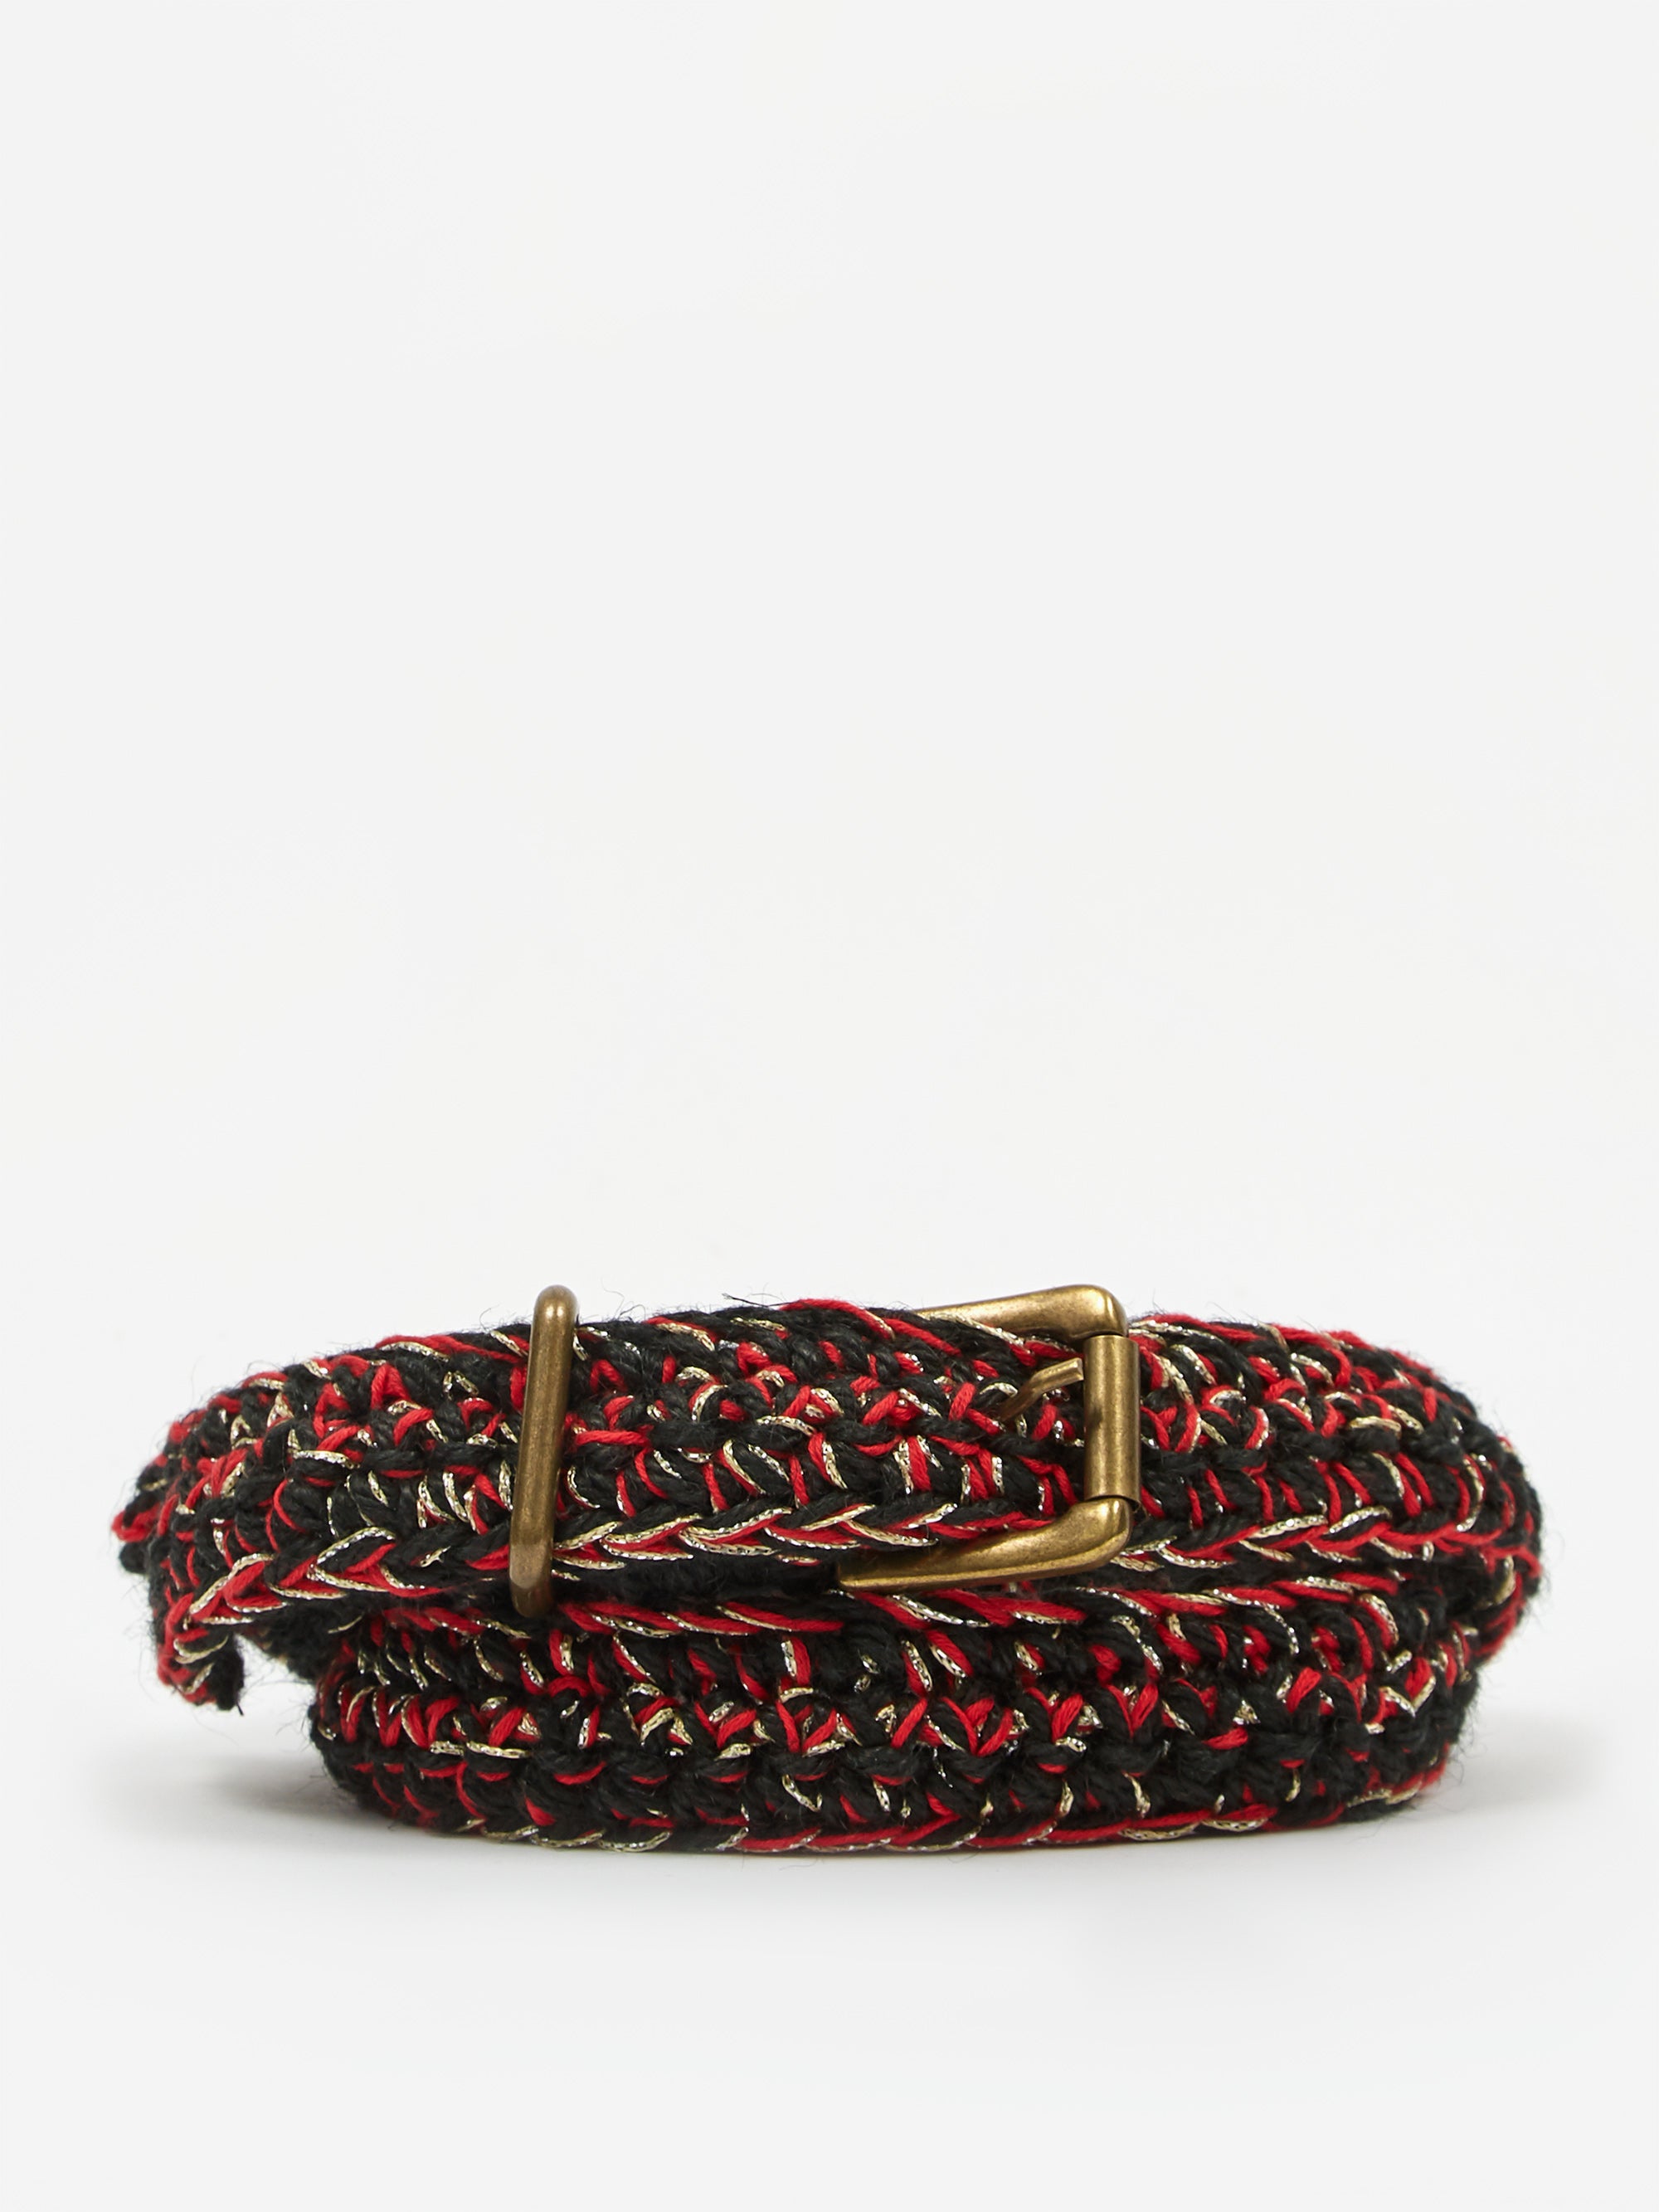 Nicholas Daley Hand Crochet Belt - Black/Red/Burgundy/Yellow